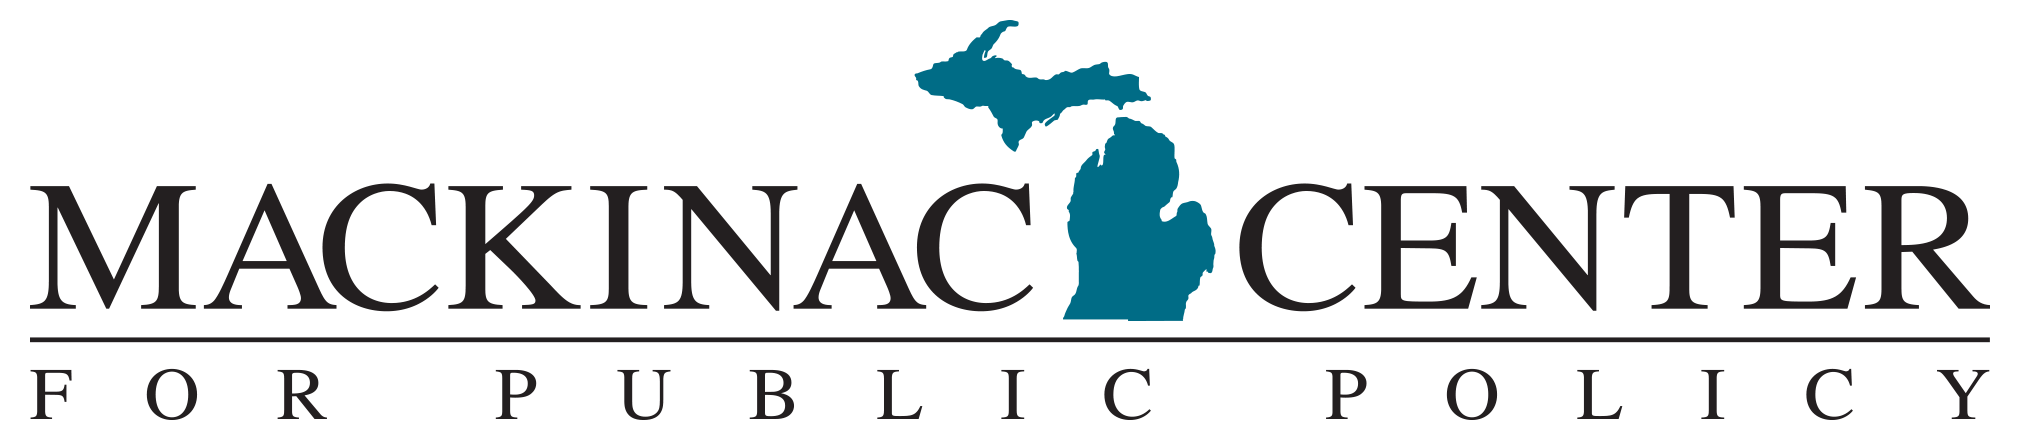 Mackinac logo